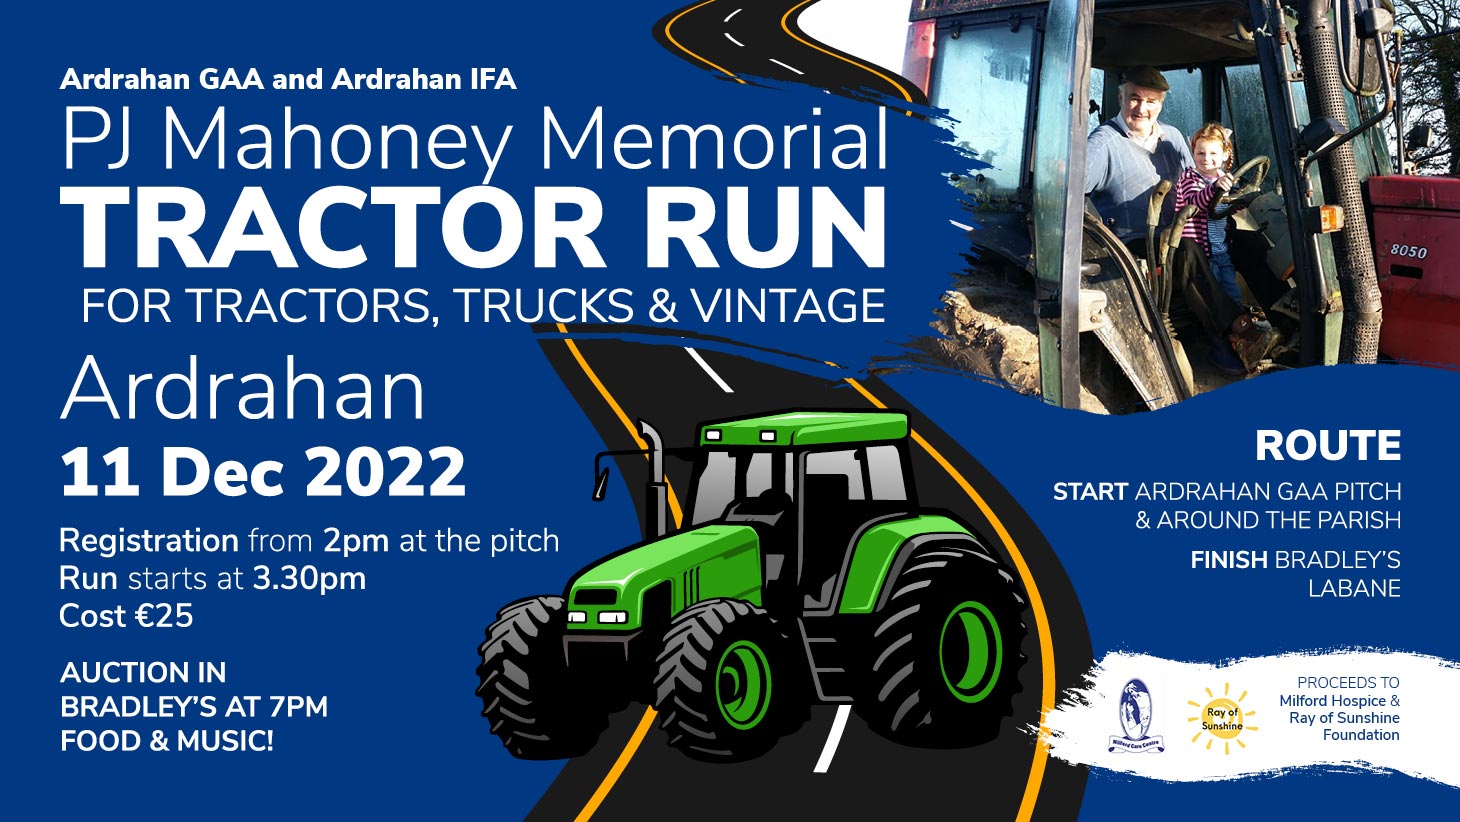 PJ Mahoney Memorial Tractor Run